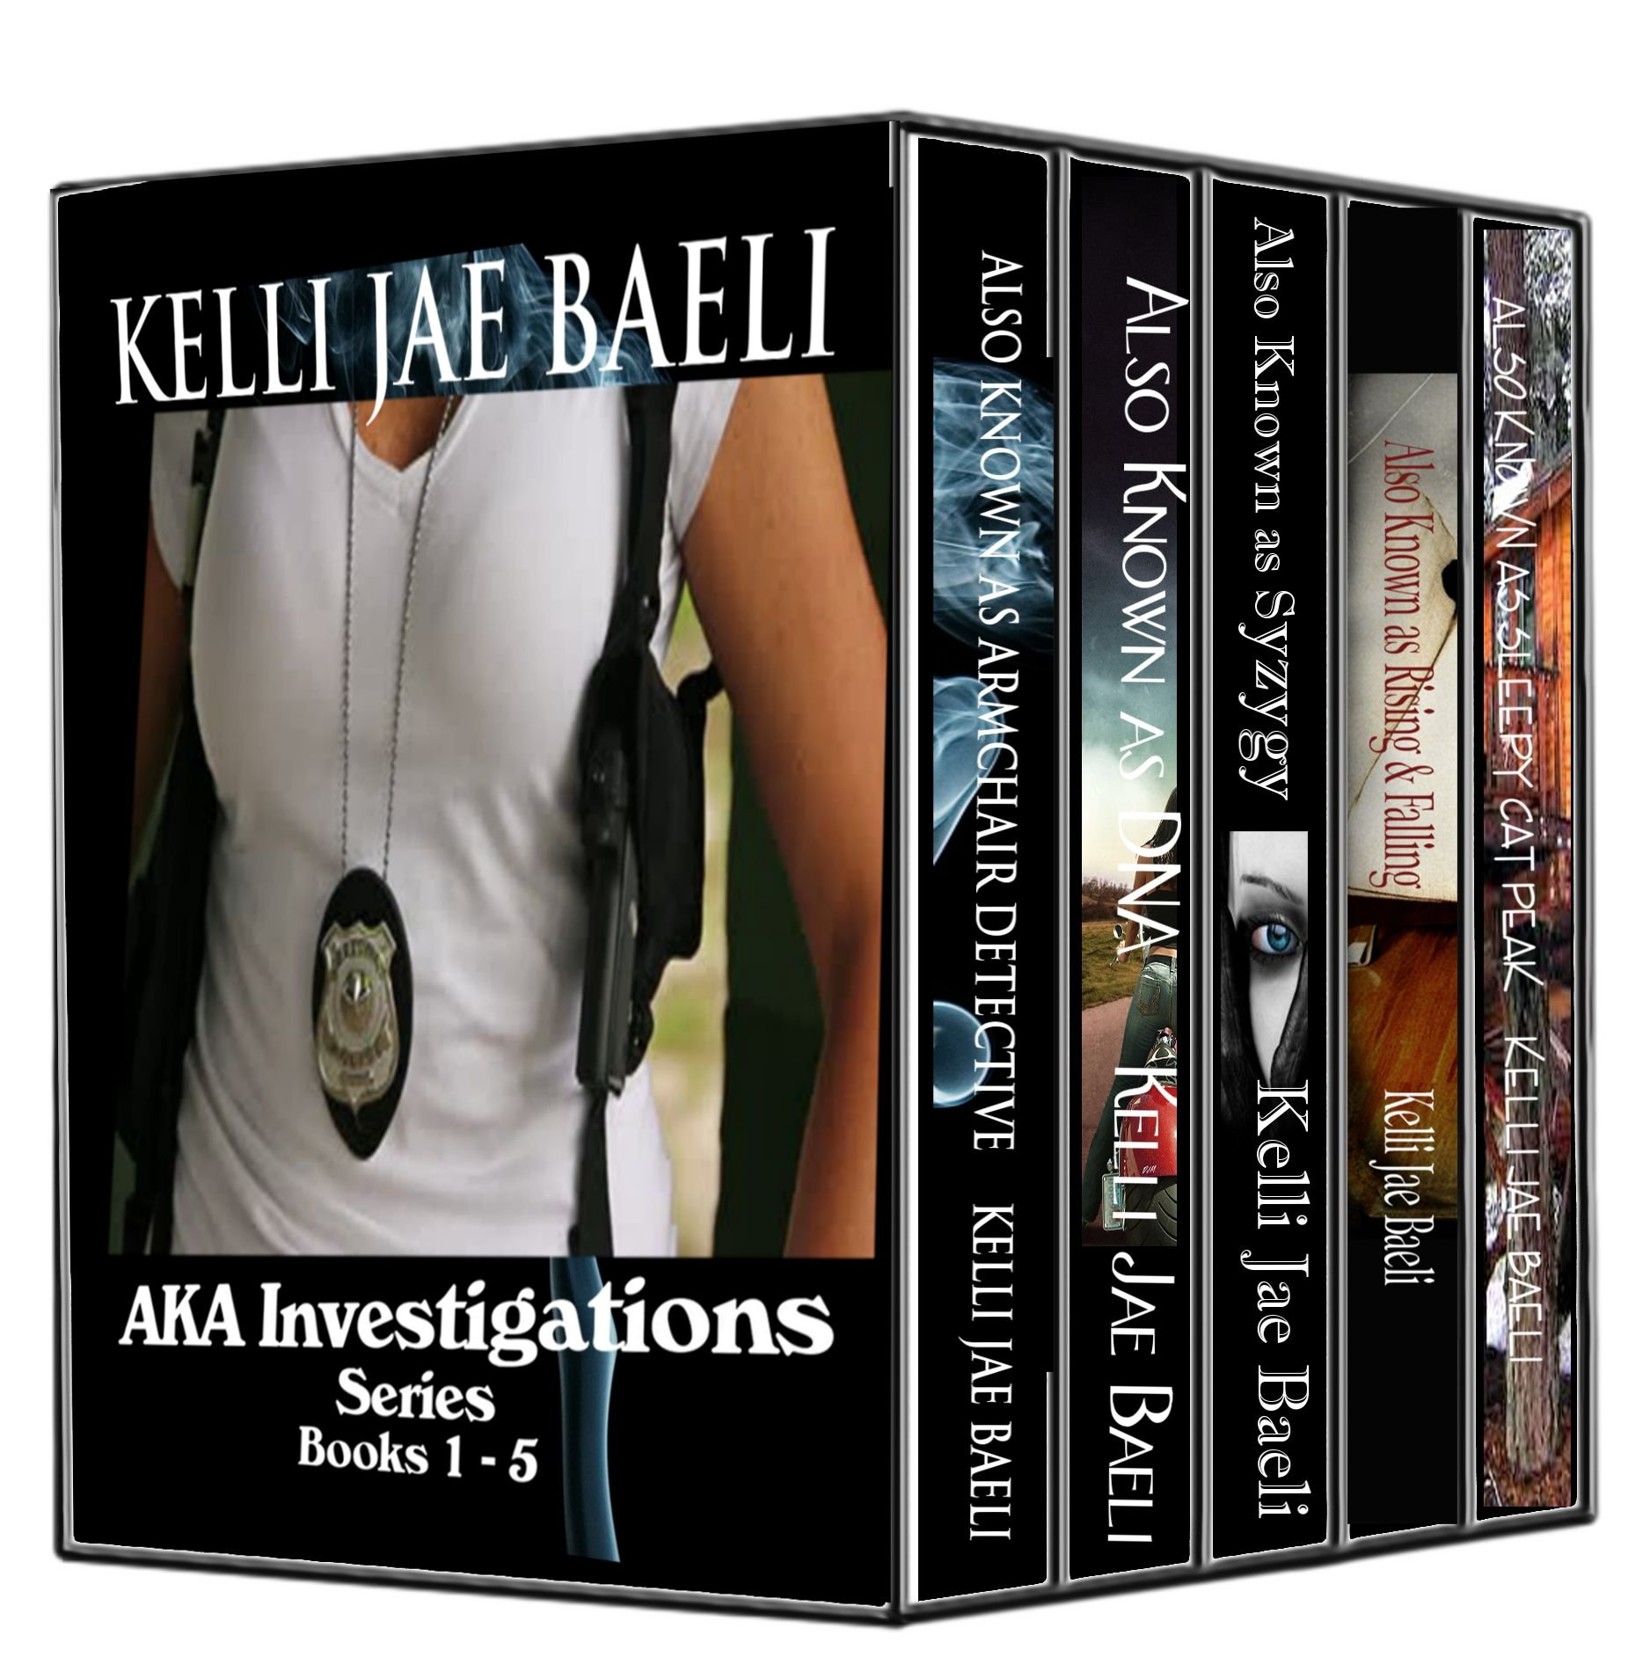 AKA Investigations Series: Box Set, 5 Full Novels